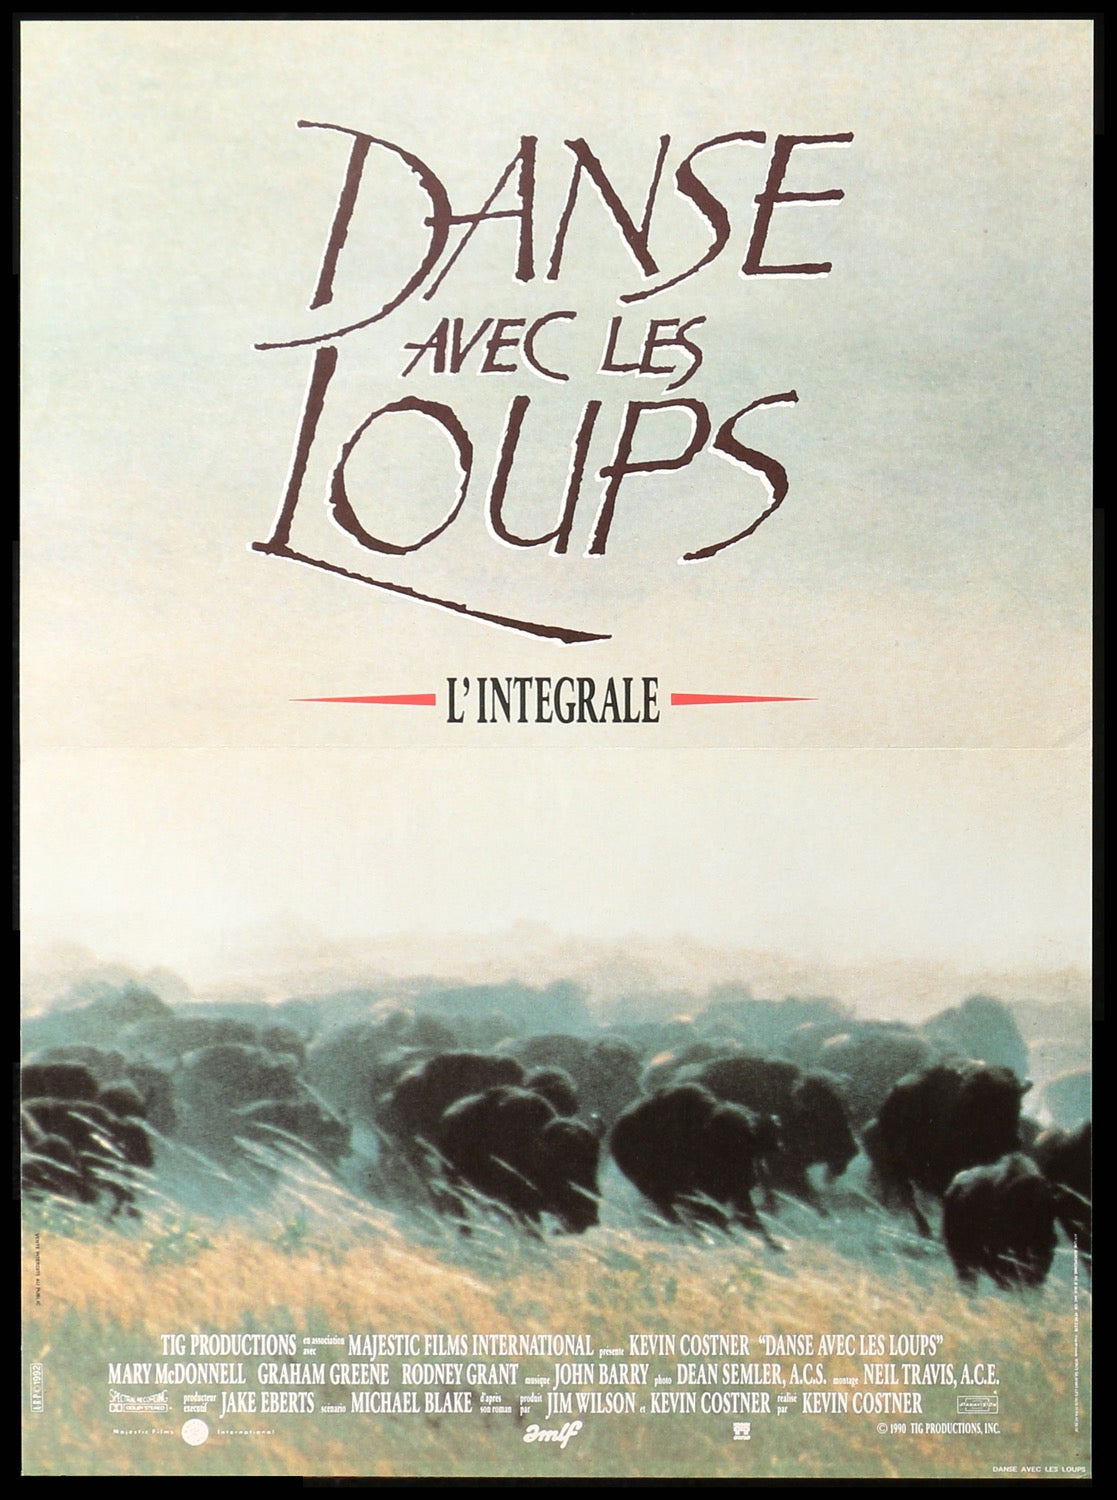 Dances with Wolves (1990) original movie poster for sale at Original Film Art